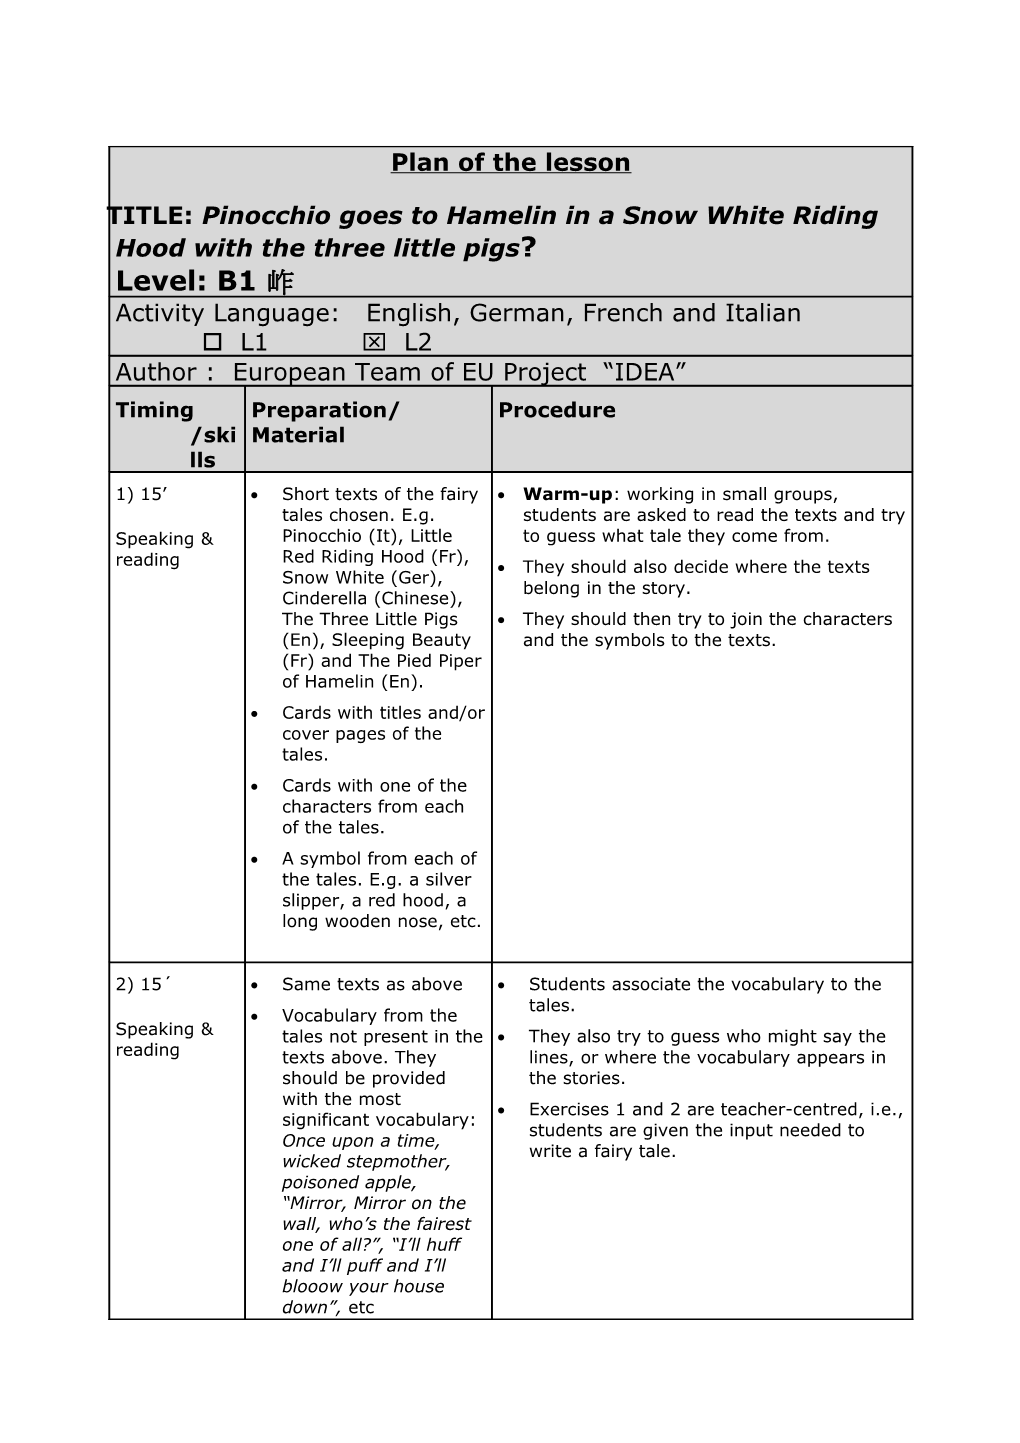 Sample Sheet for Exercises IDEA